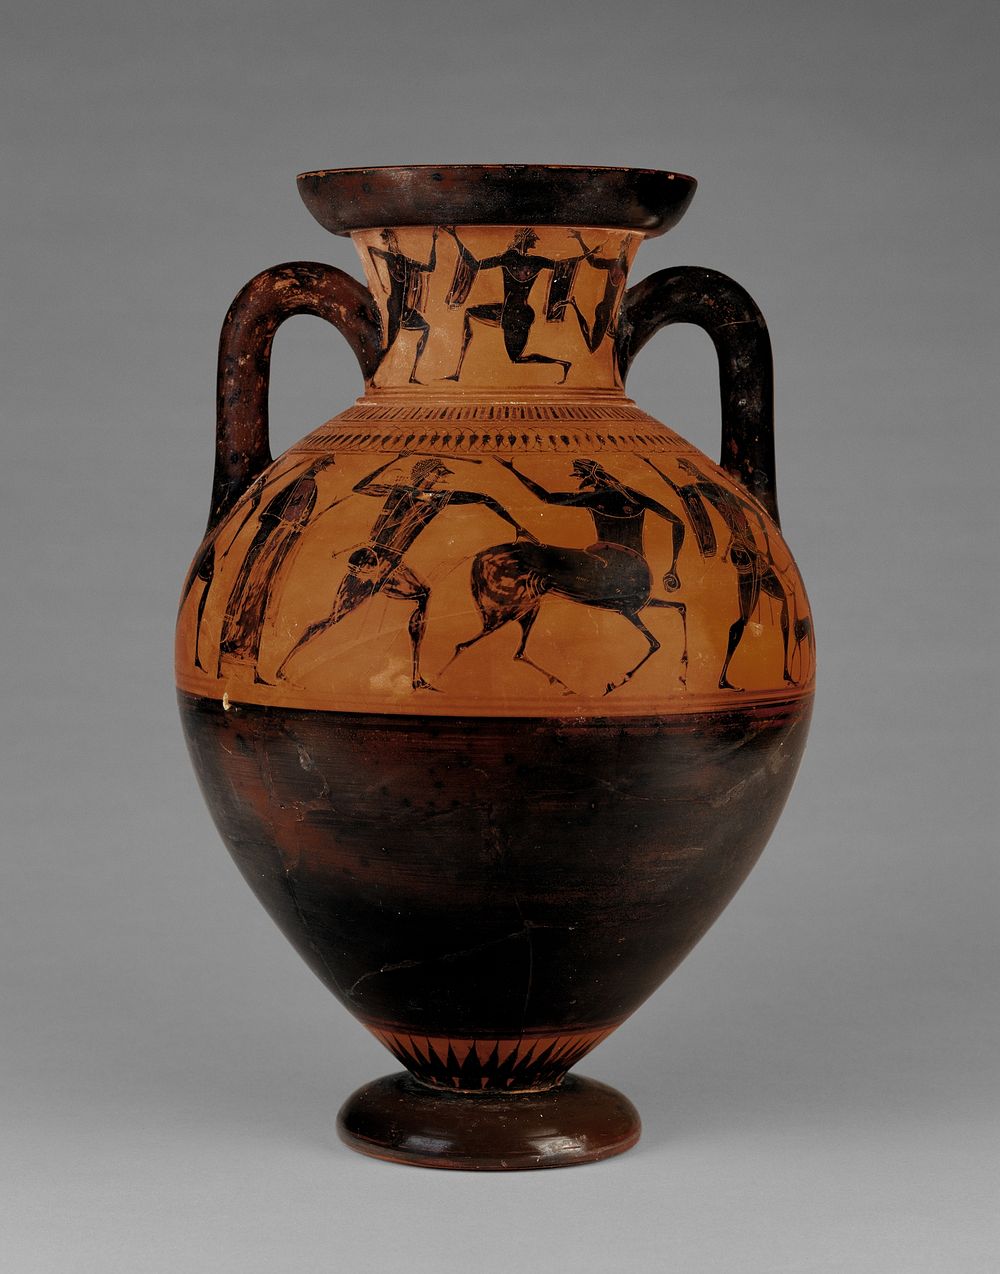 Attic Black-Figure Neck Amphora by Affecter